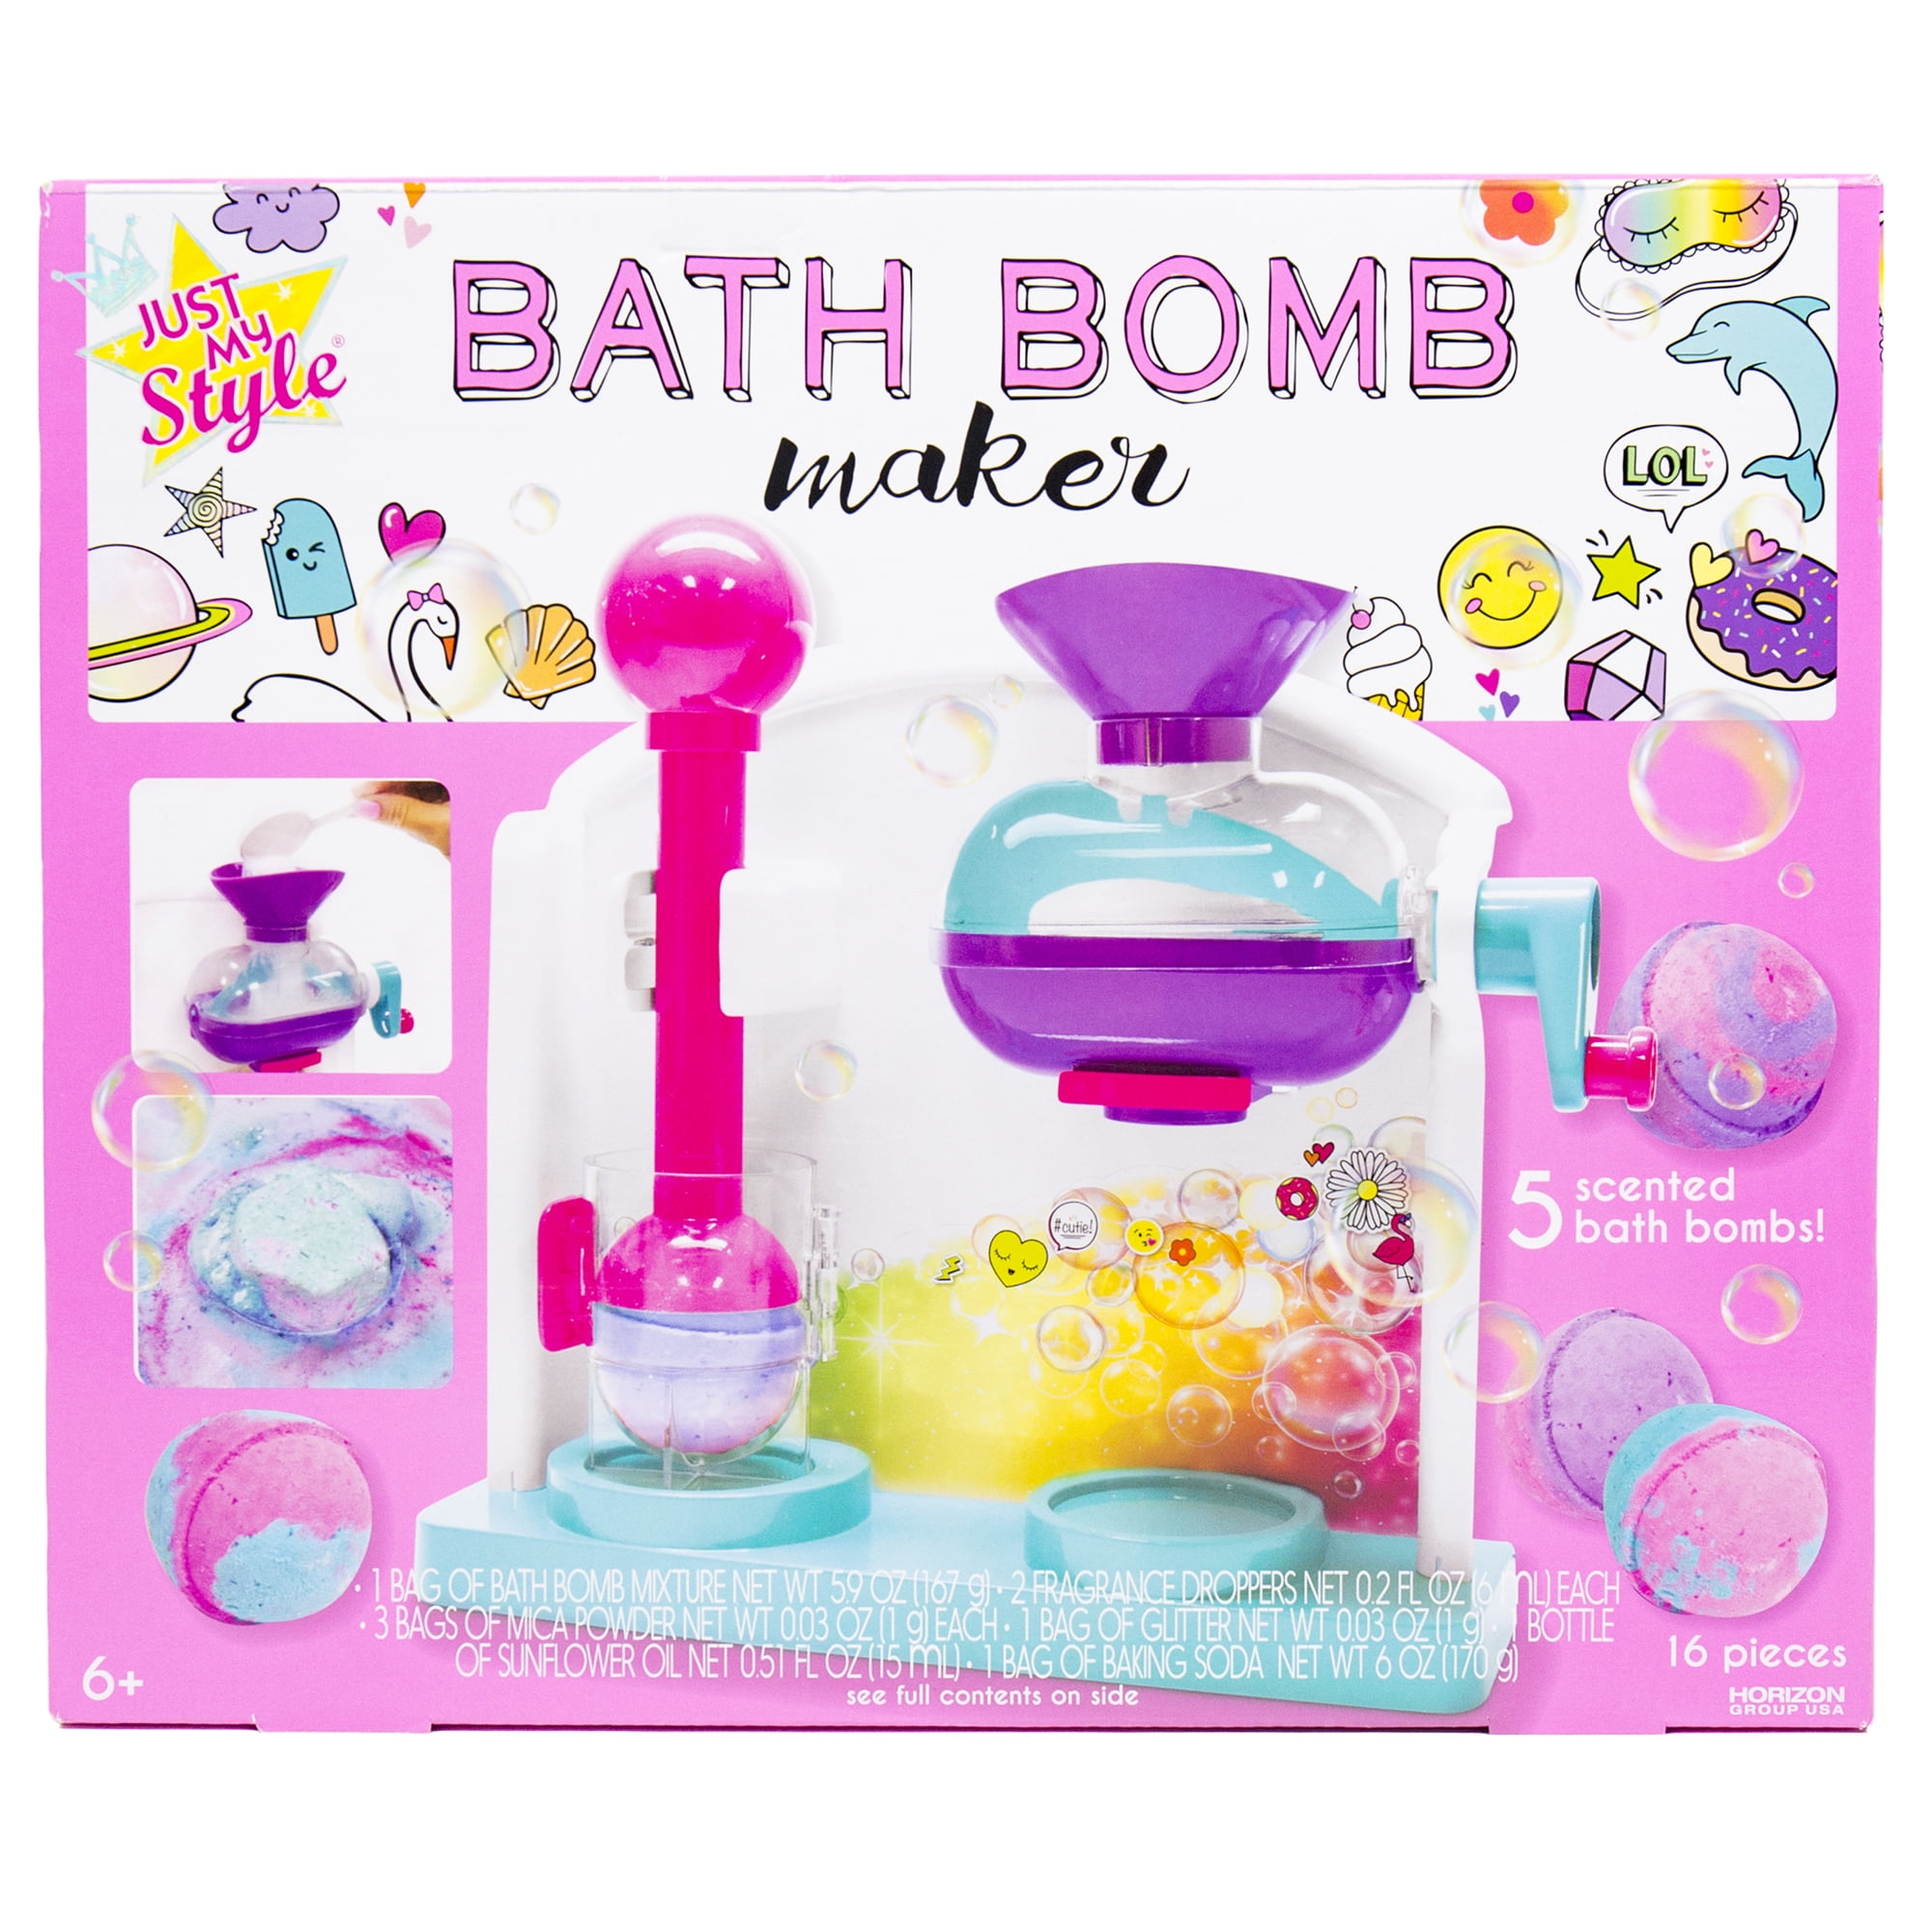 Bath Bomb Press. gumball bath bomb mold